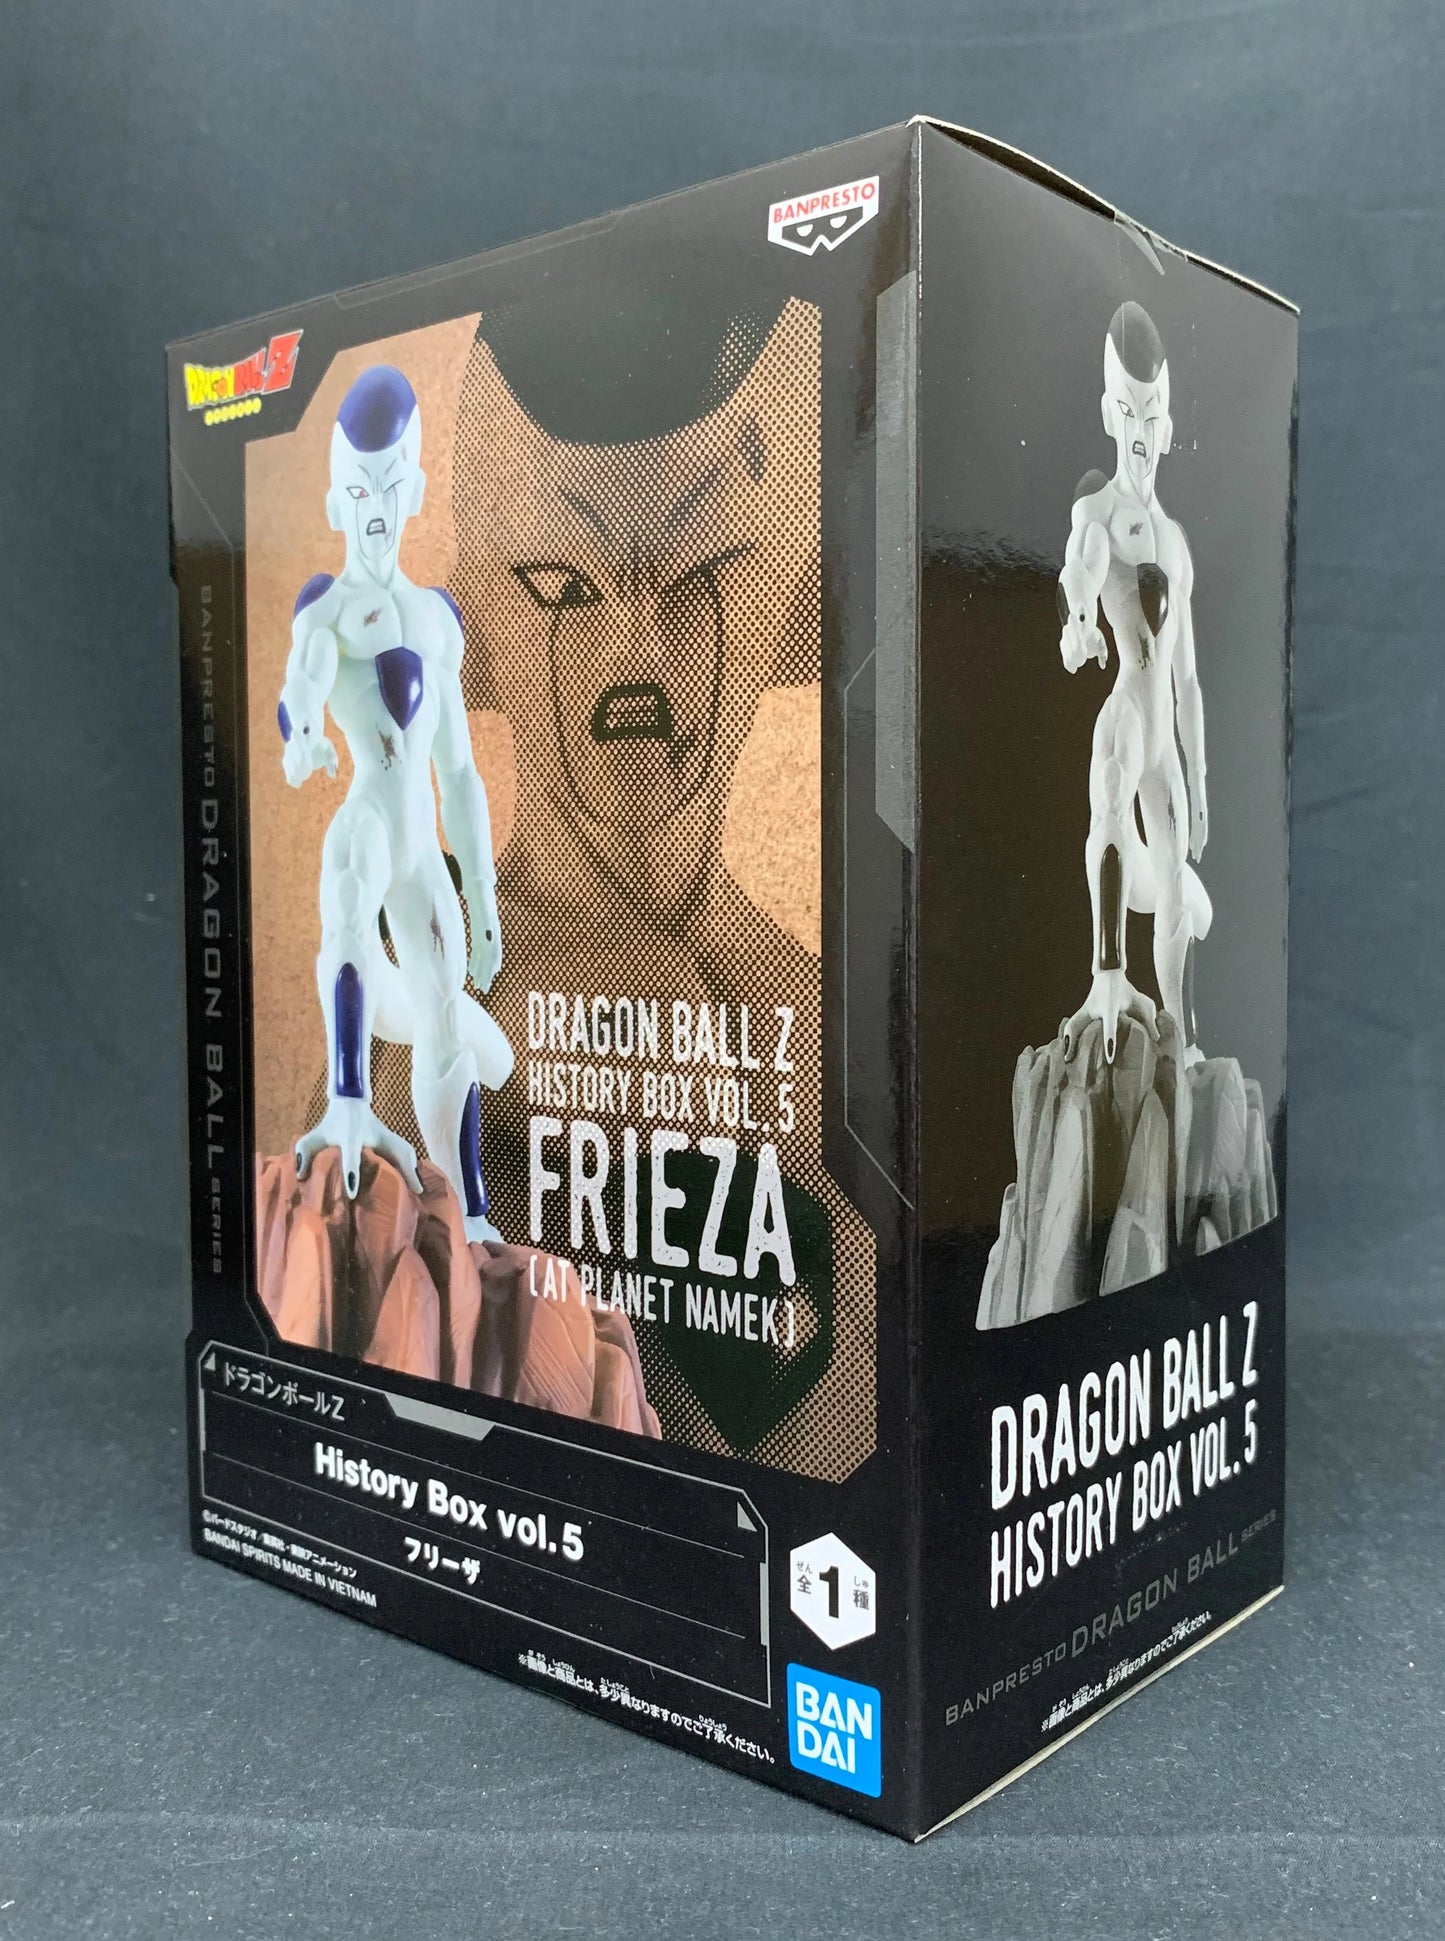 DRAGON BALL Z - HISTORY BOX VOL.5 FRIEZA (AT PLANET NAMEK)